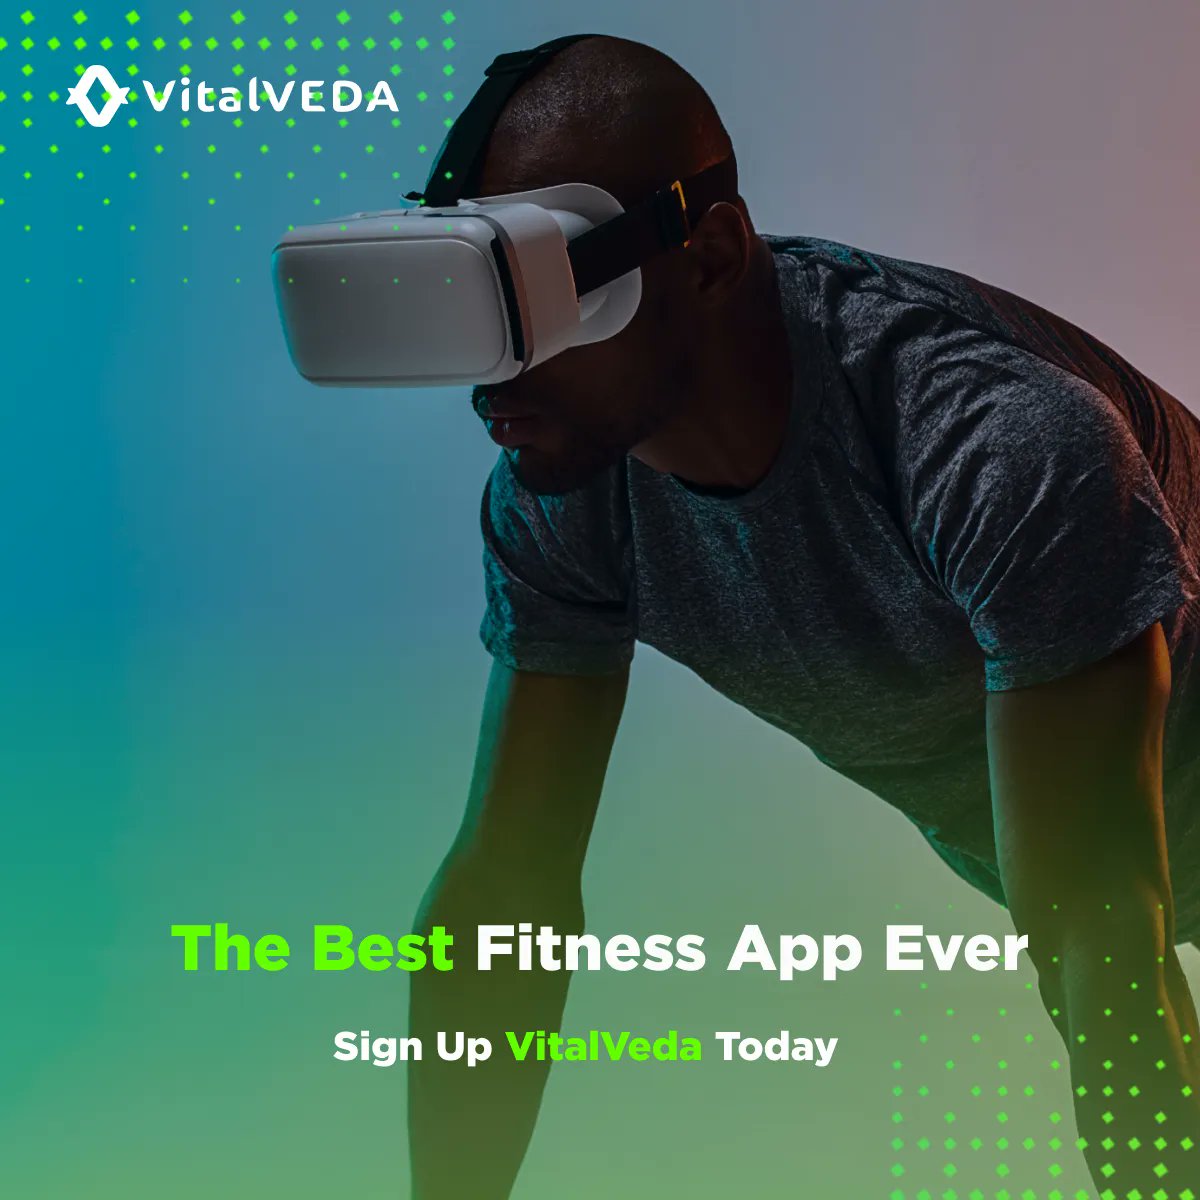 The best Fitness App Ever!
Sign up VitalVeda Today:)

#vrgaming #vrfitness #fitvr #metaverse #blockchain #movetoearn #exercisetoearn #nftgaming #p2e #vitalveda #web3 #web3community #web3gaming